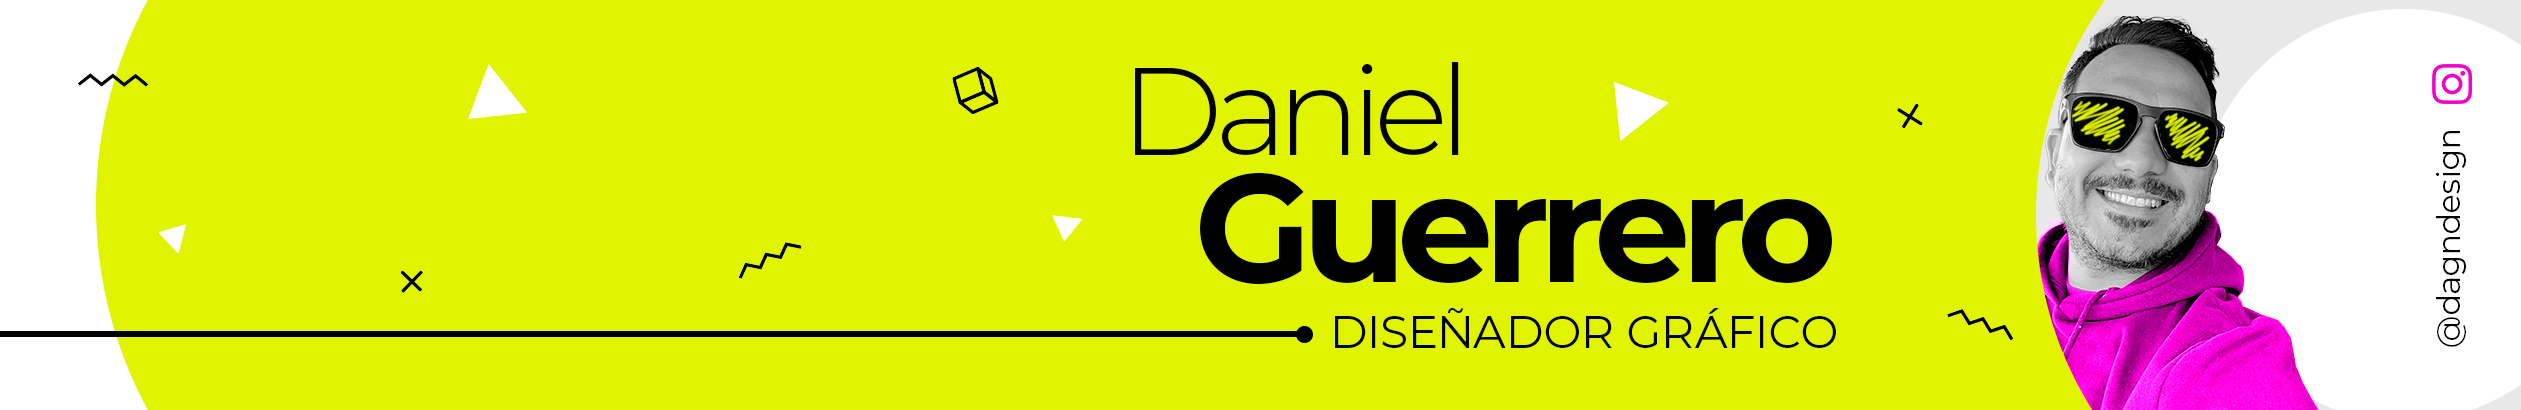 Daniel Guerrero's profile banner